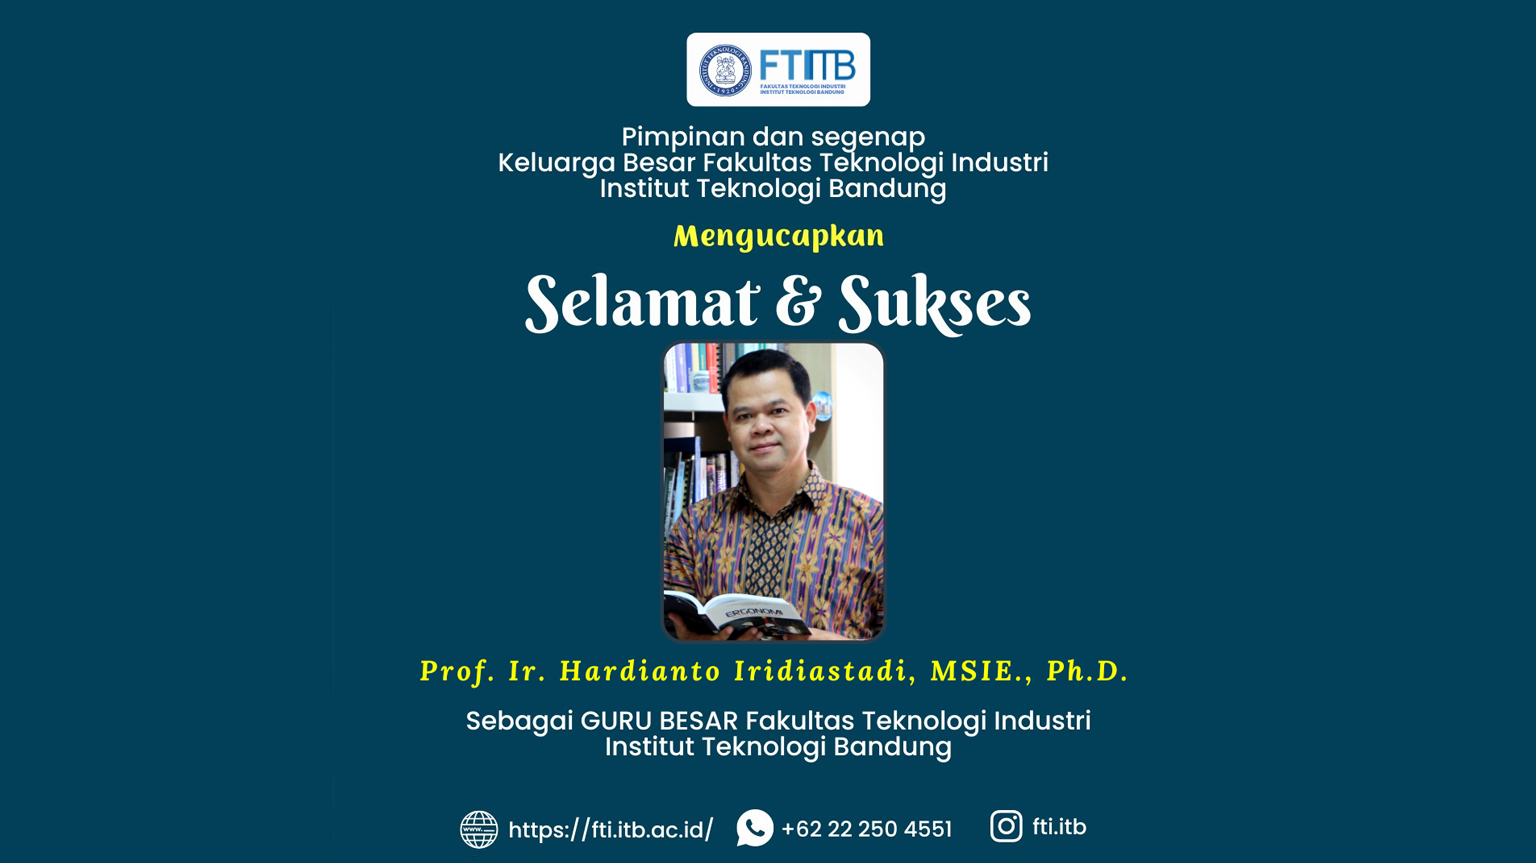 Ucapan Selamat Guru Besar Prof. Ir. Hardianto Iridiastadi, MSIE., Ph.D.